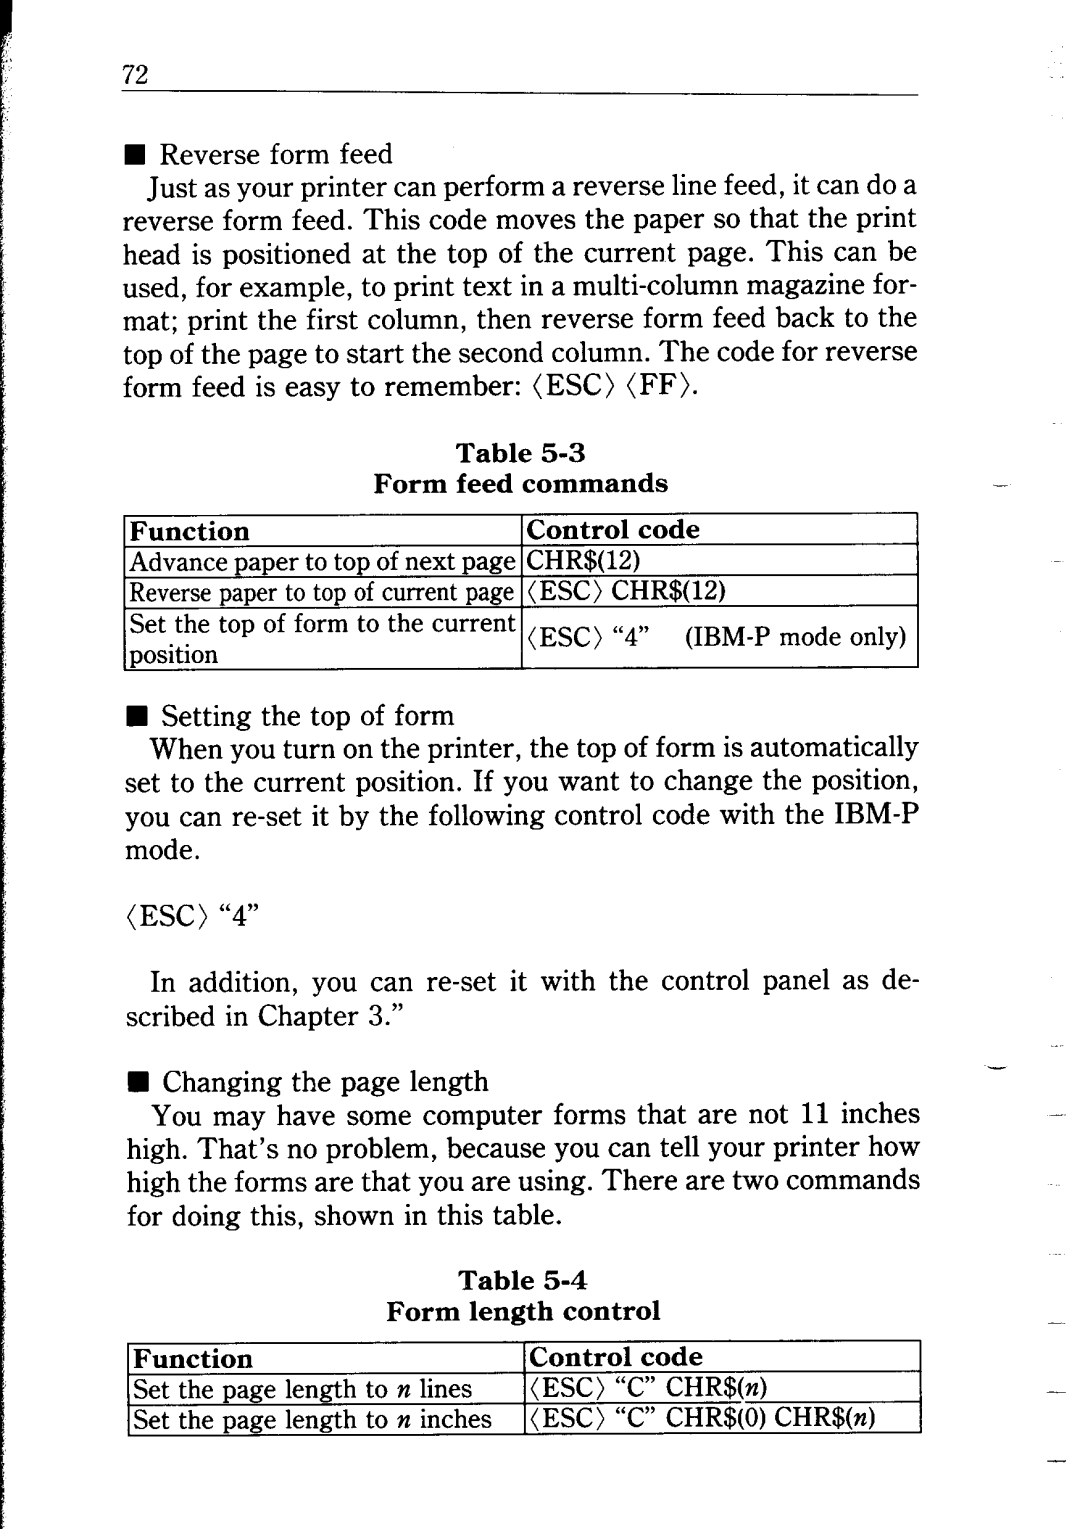 Star Micronics NB24-10/15 user manual n Reverse form feed 